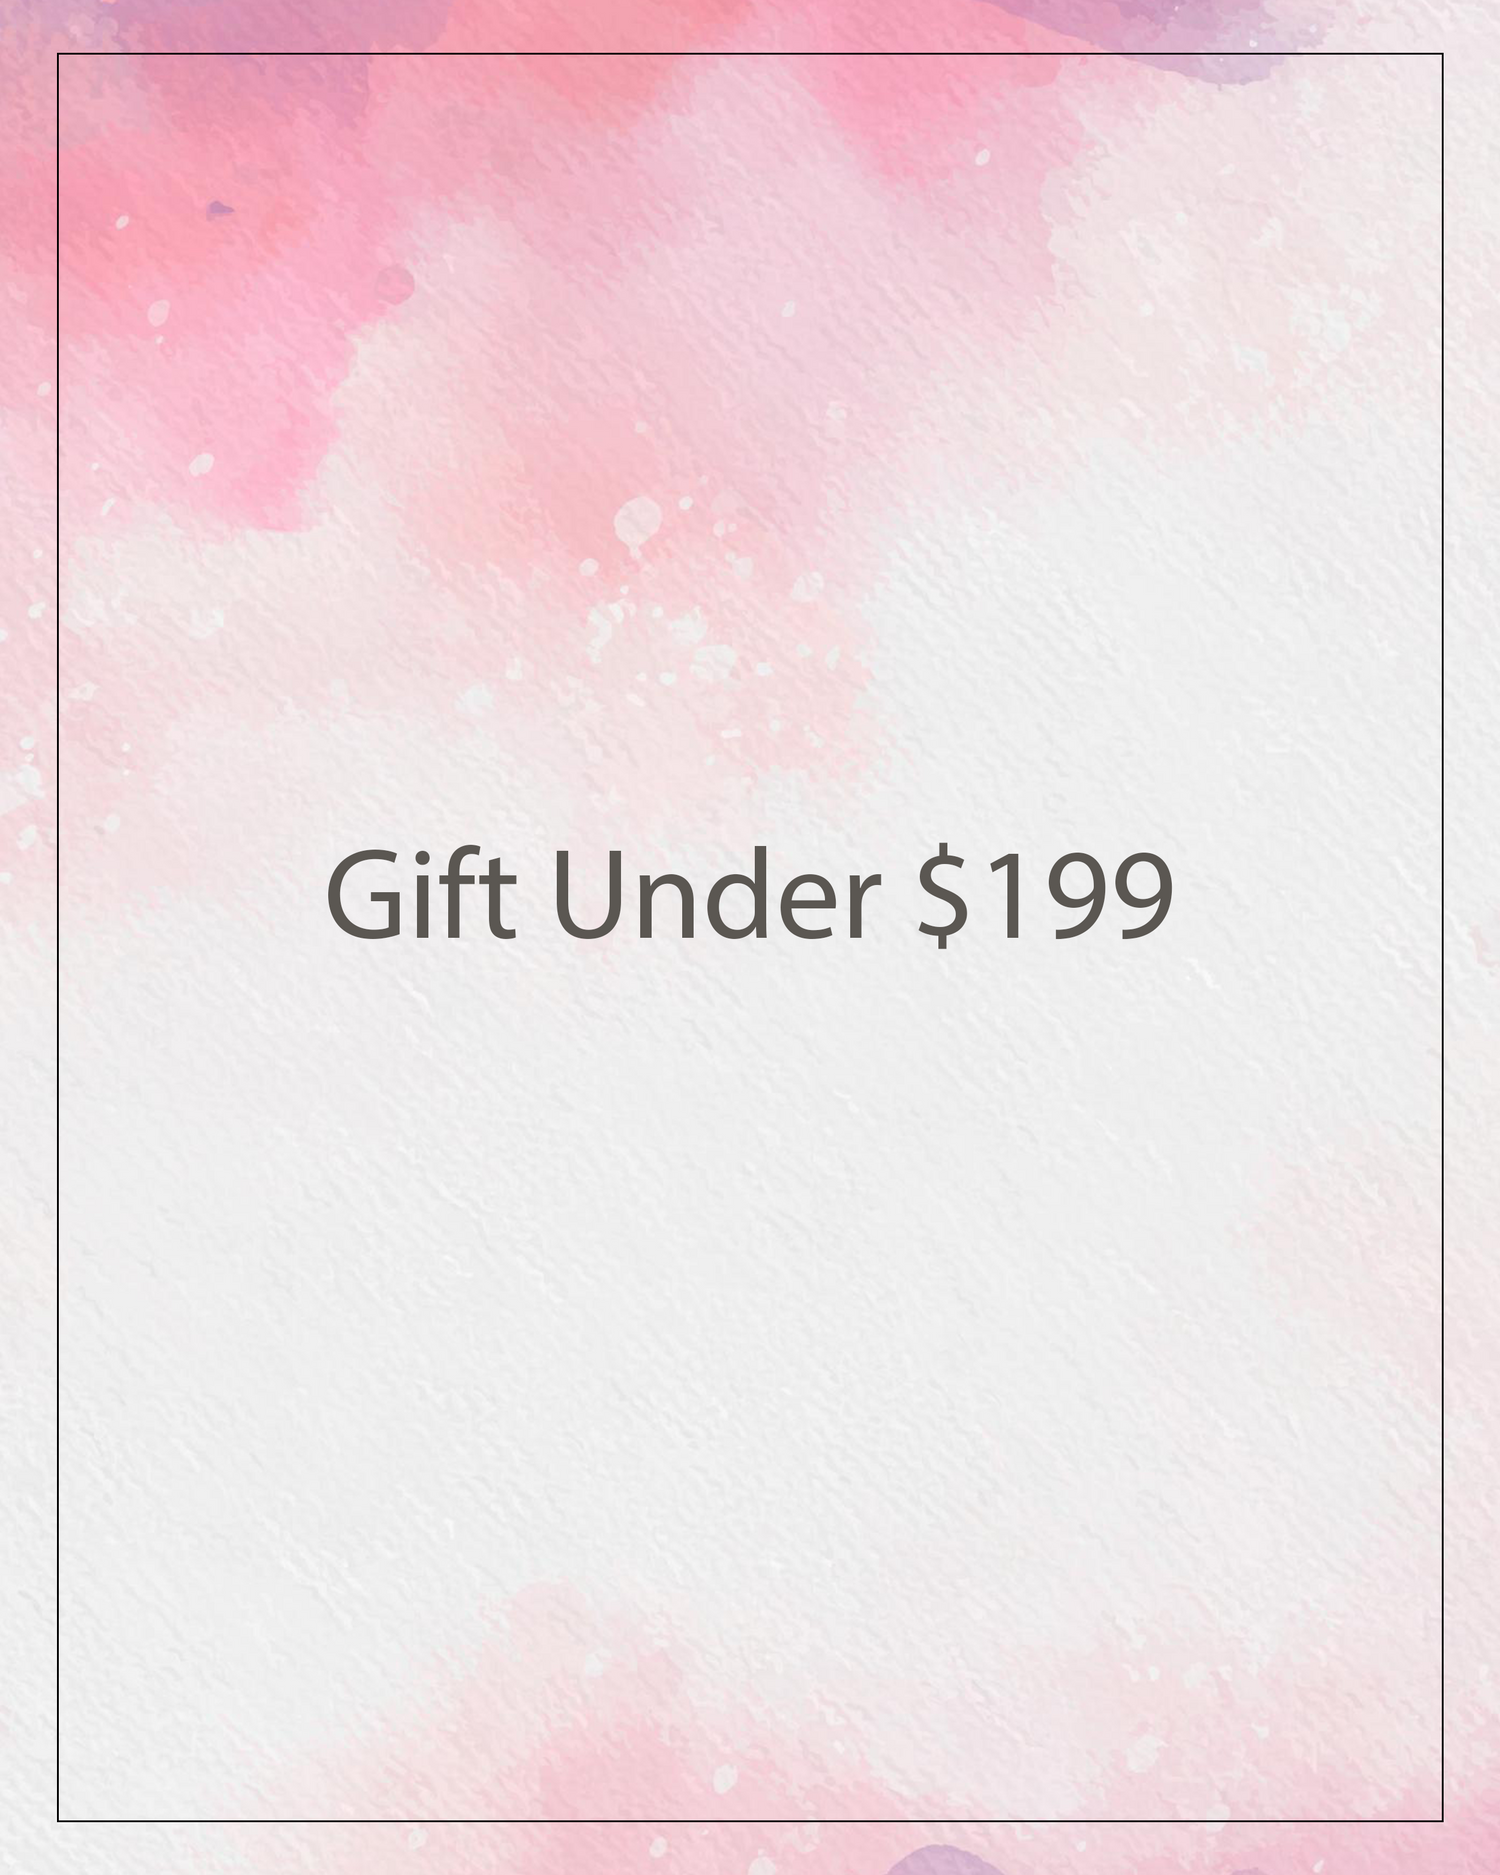 Gifts Under $199